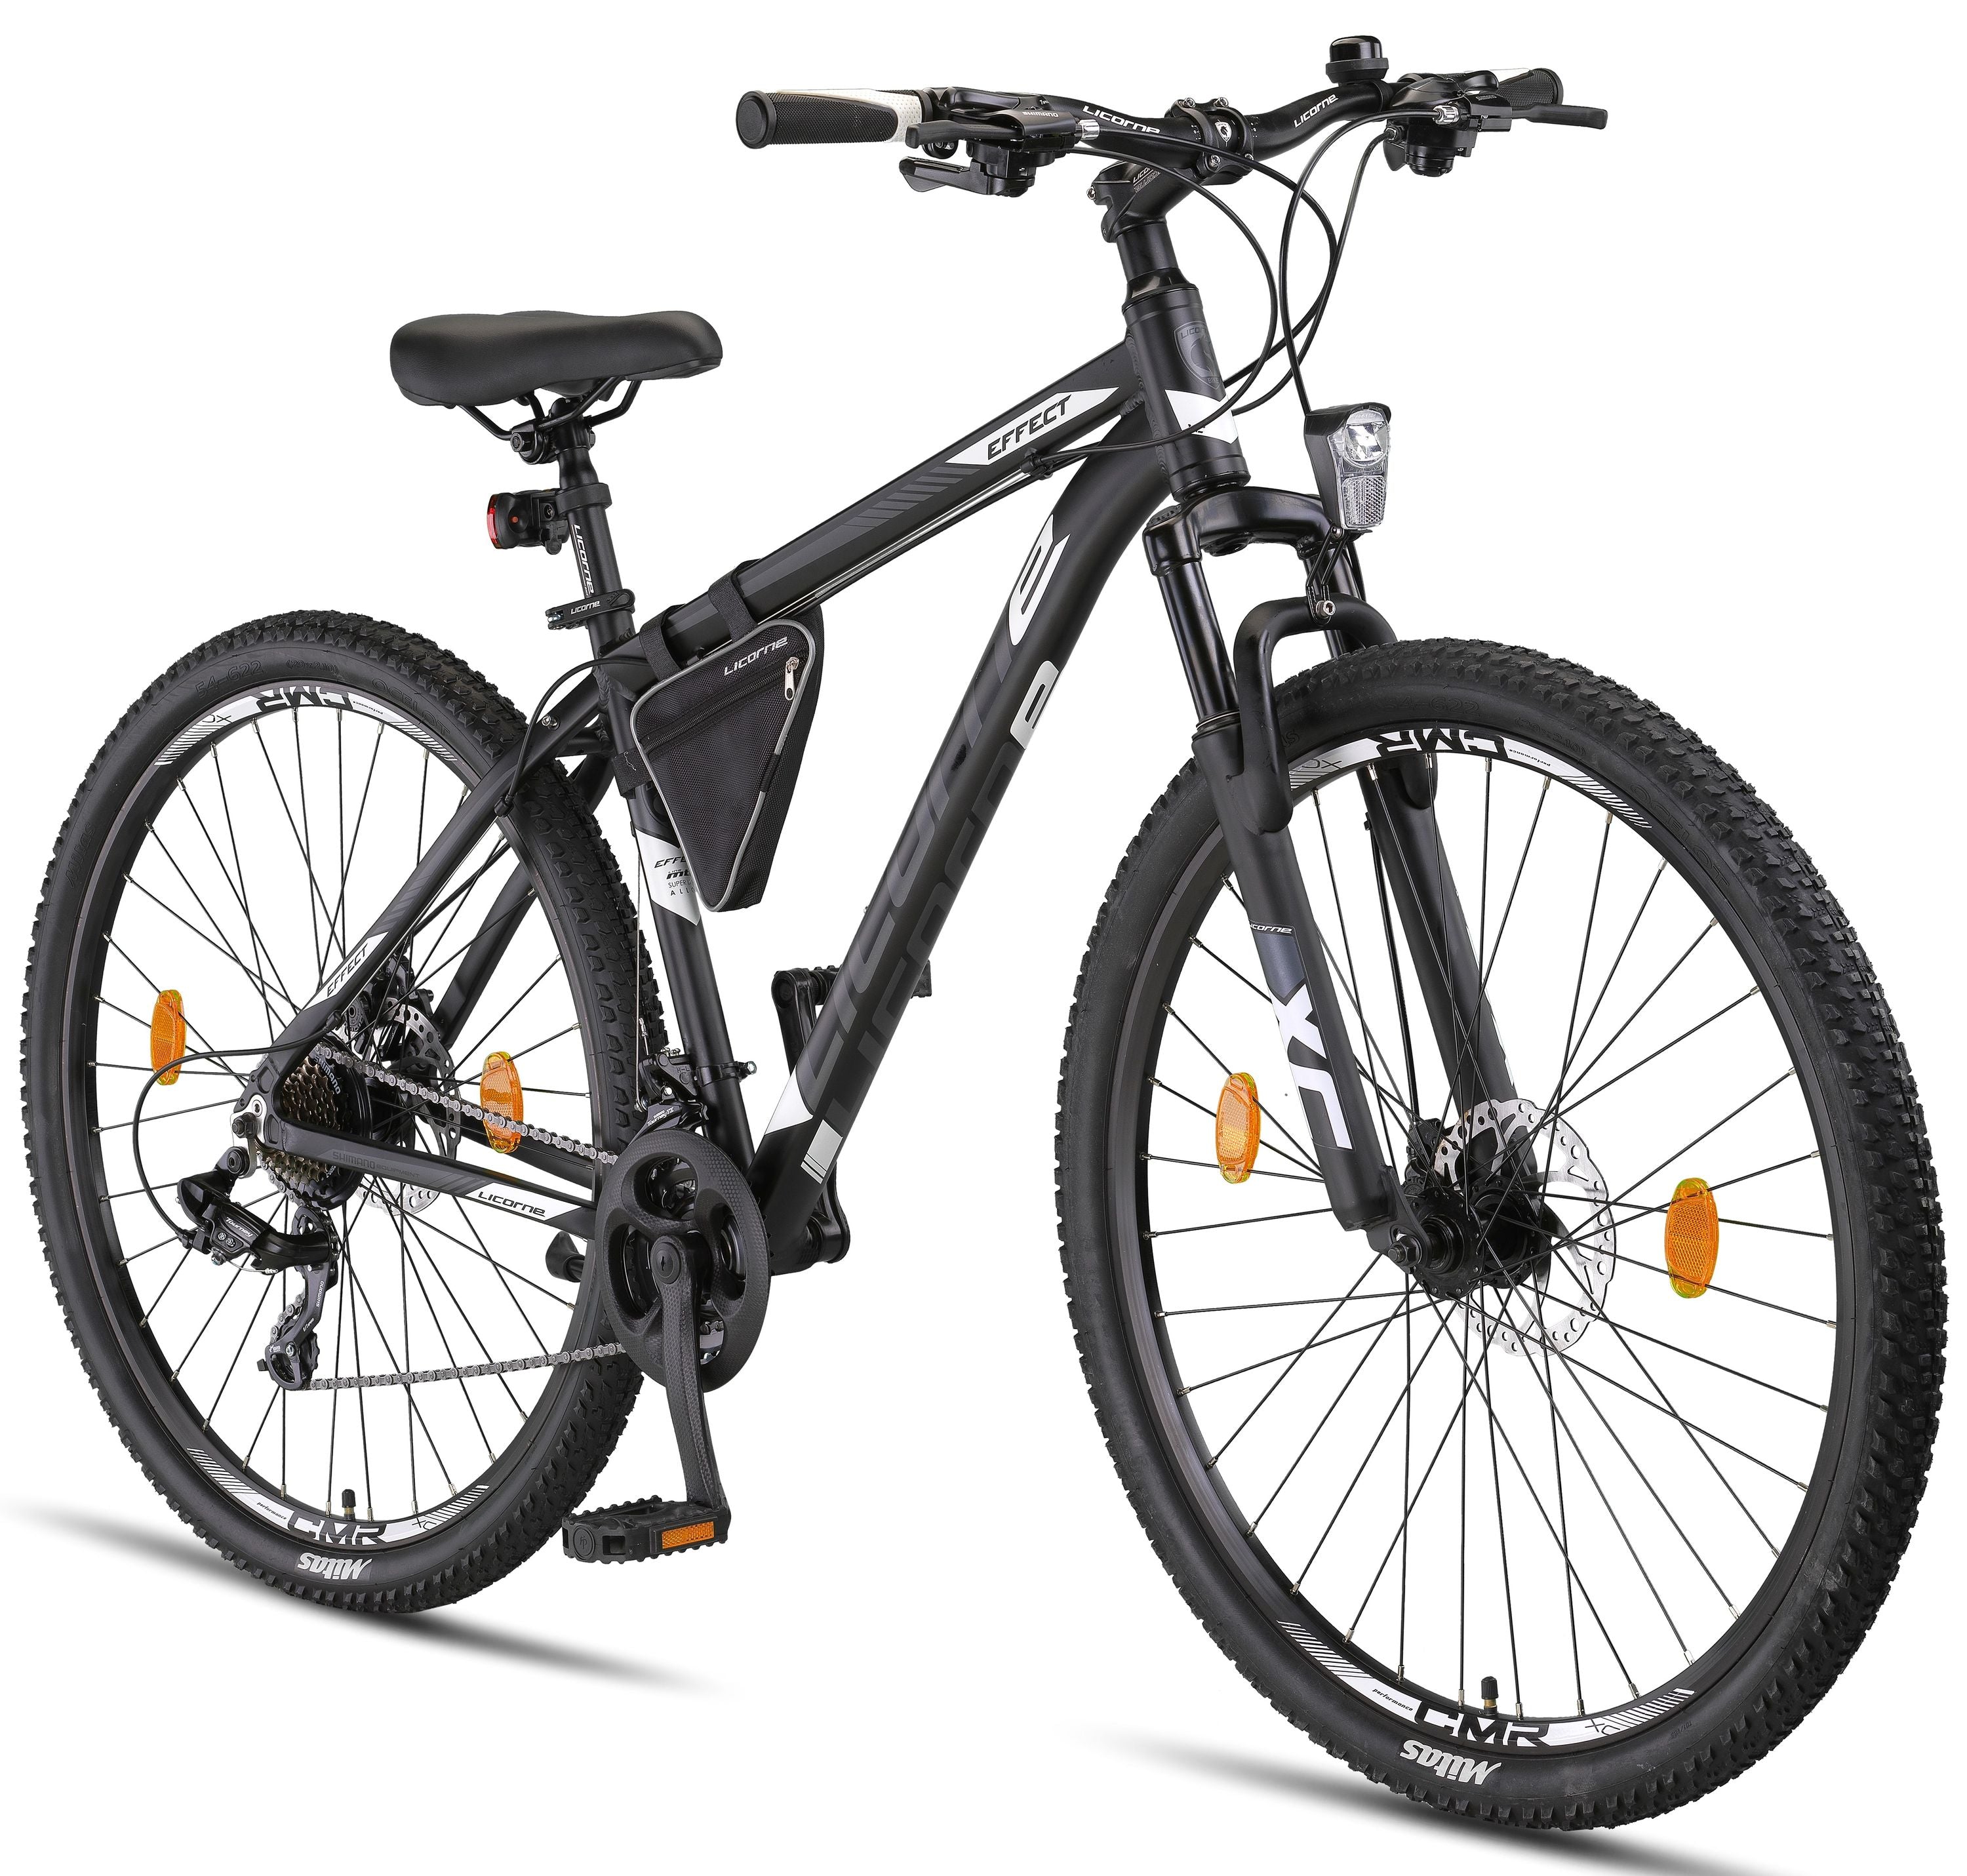 Licorne Bike Effect premium mountain bike in 26, 27.5 and 29 inch - bike for boys, girls, men and women - Shimano 21 speed gears - men's bike